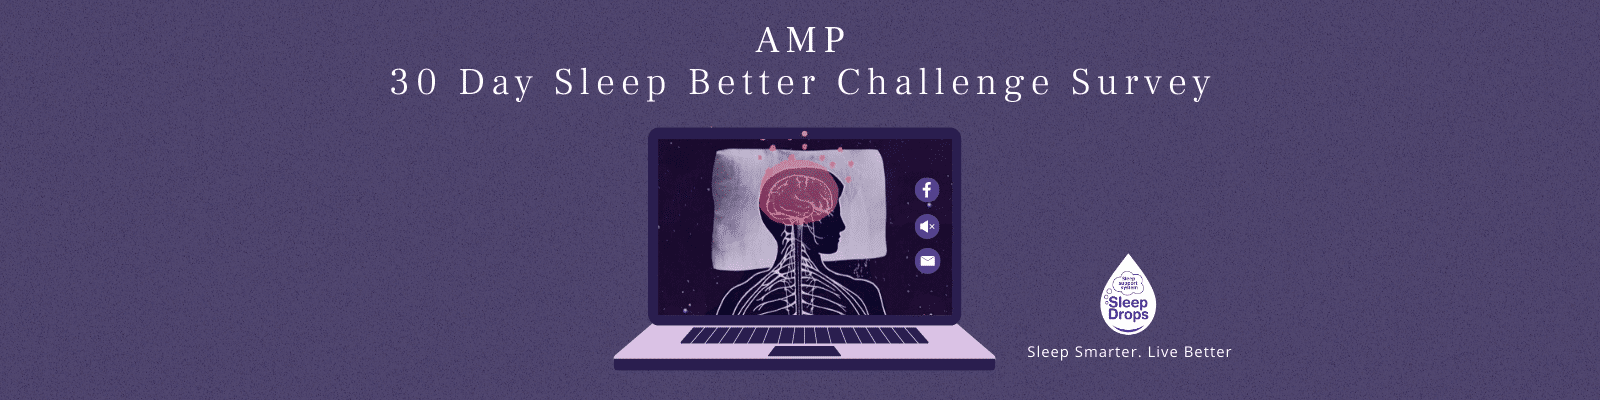 AMP 30 day sleep better challenge survey